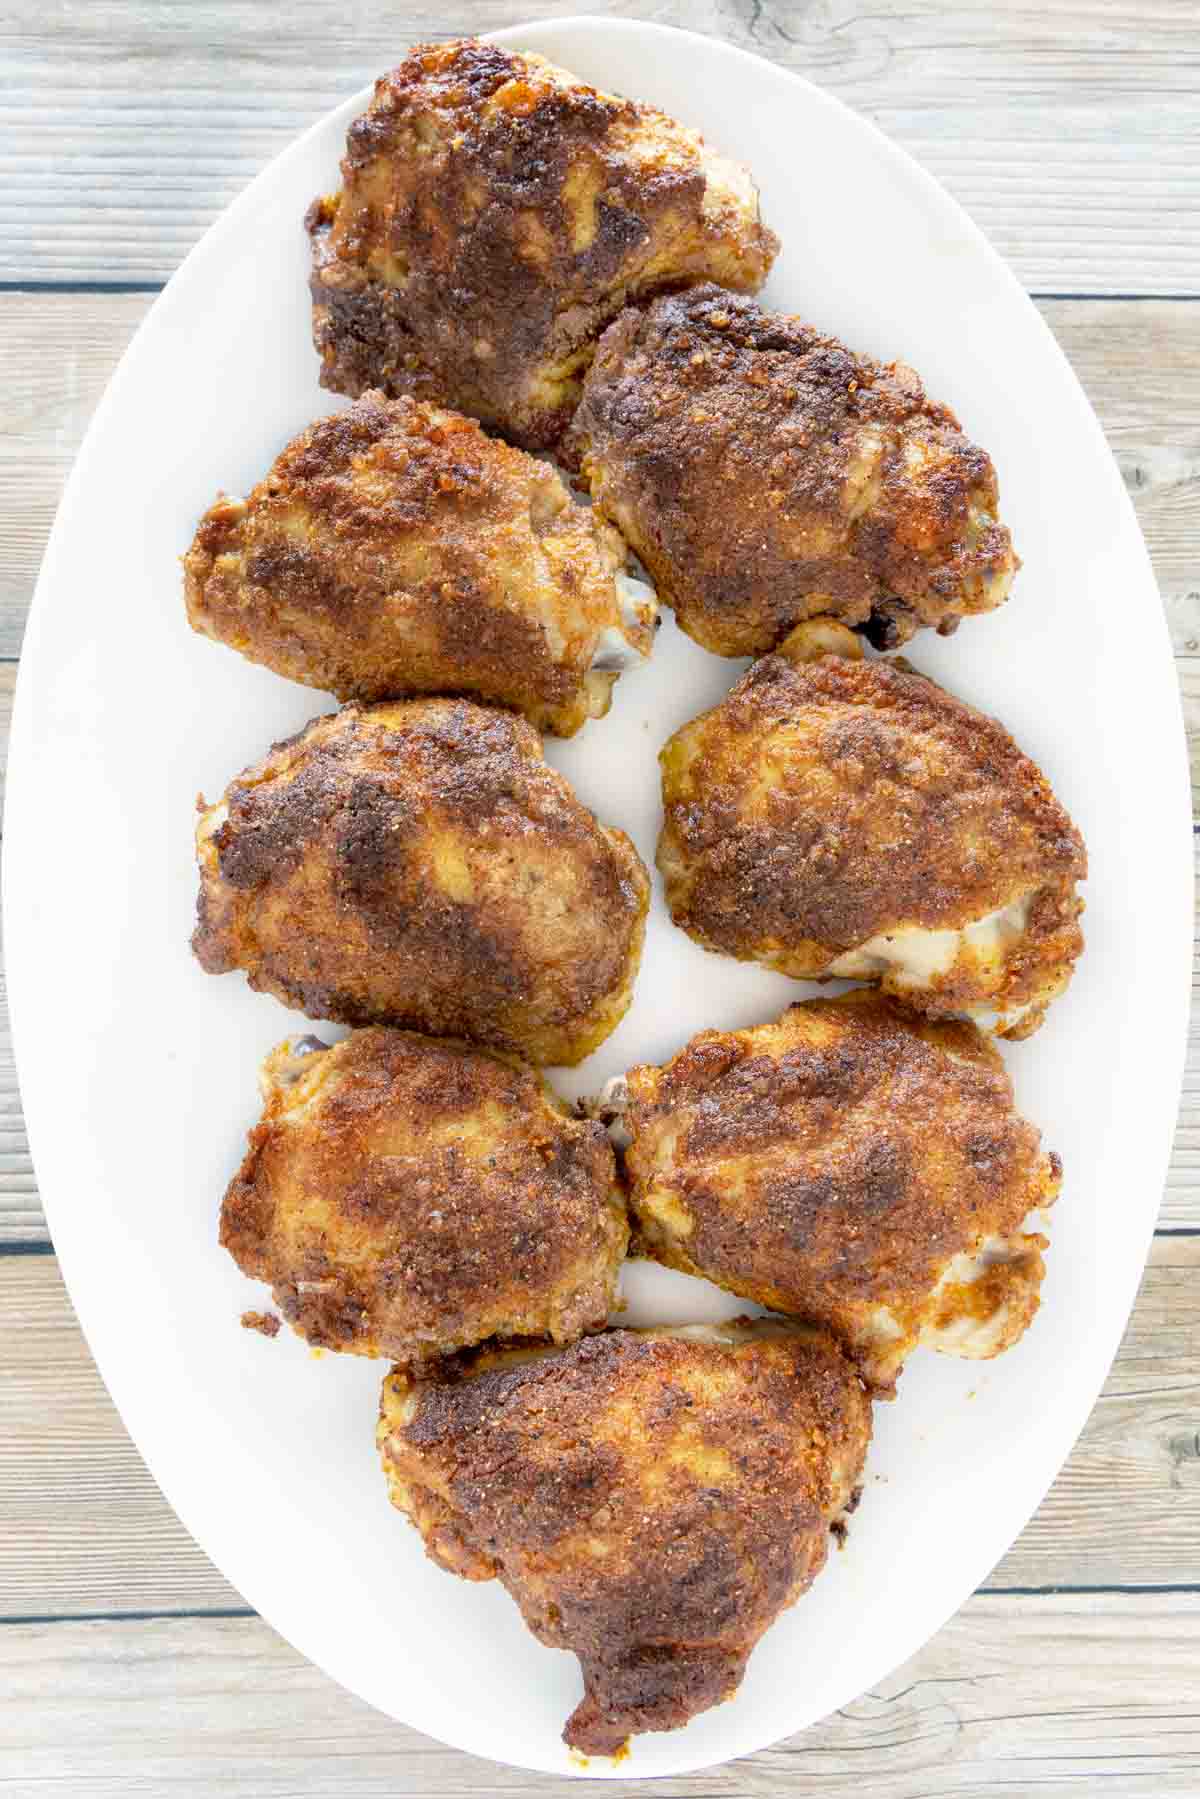 Dan-O's crispy original chicken thighs🤤🙌 #cookathome #comfortfood #g, baked chicken thighs